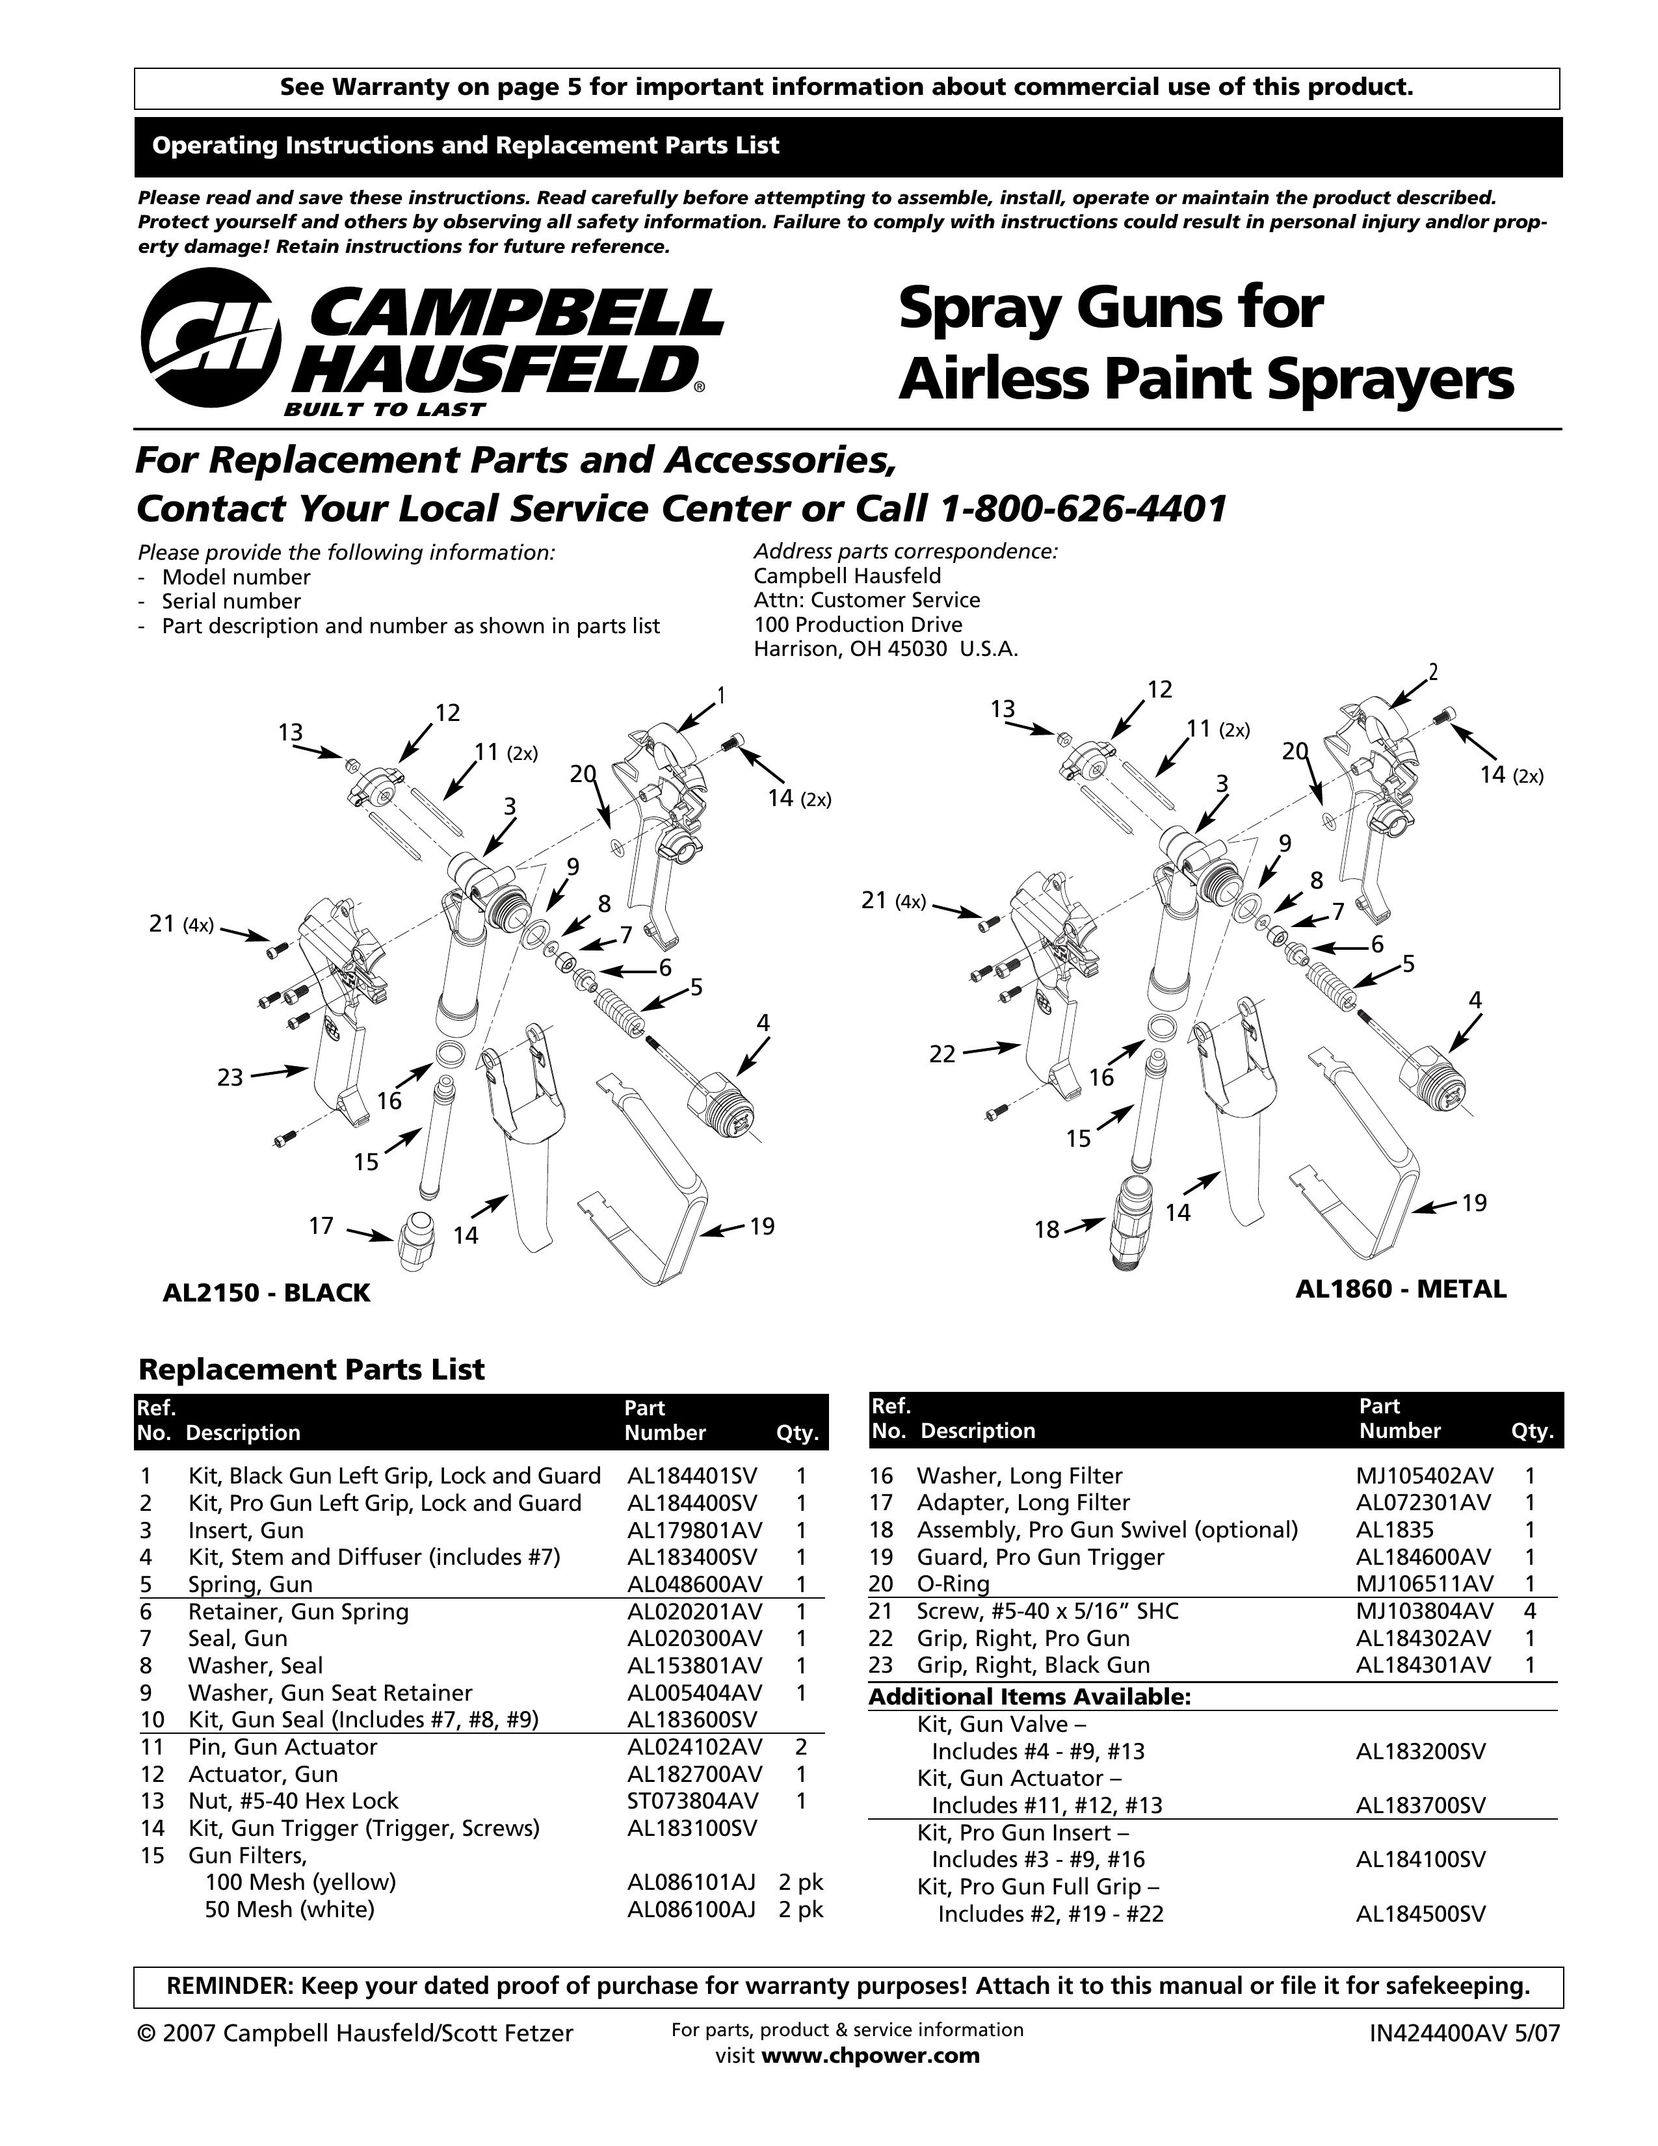 Campbell Hausfeld AL2150 - BLACK Paint Sprayer User Manual